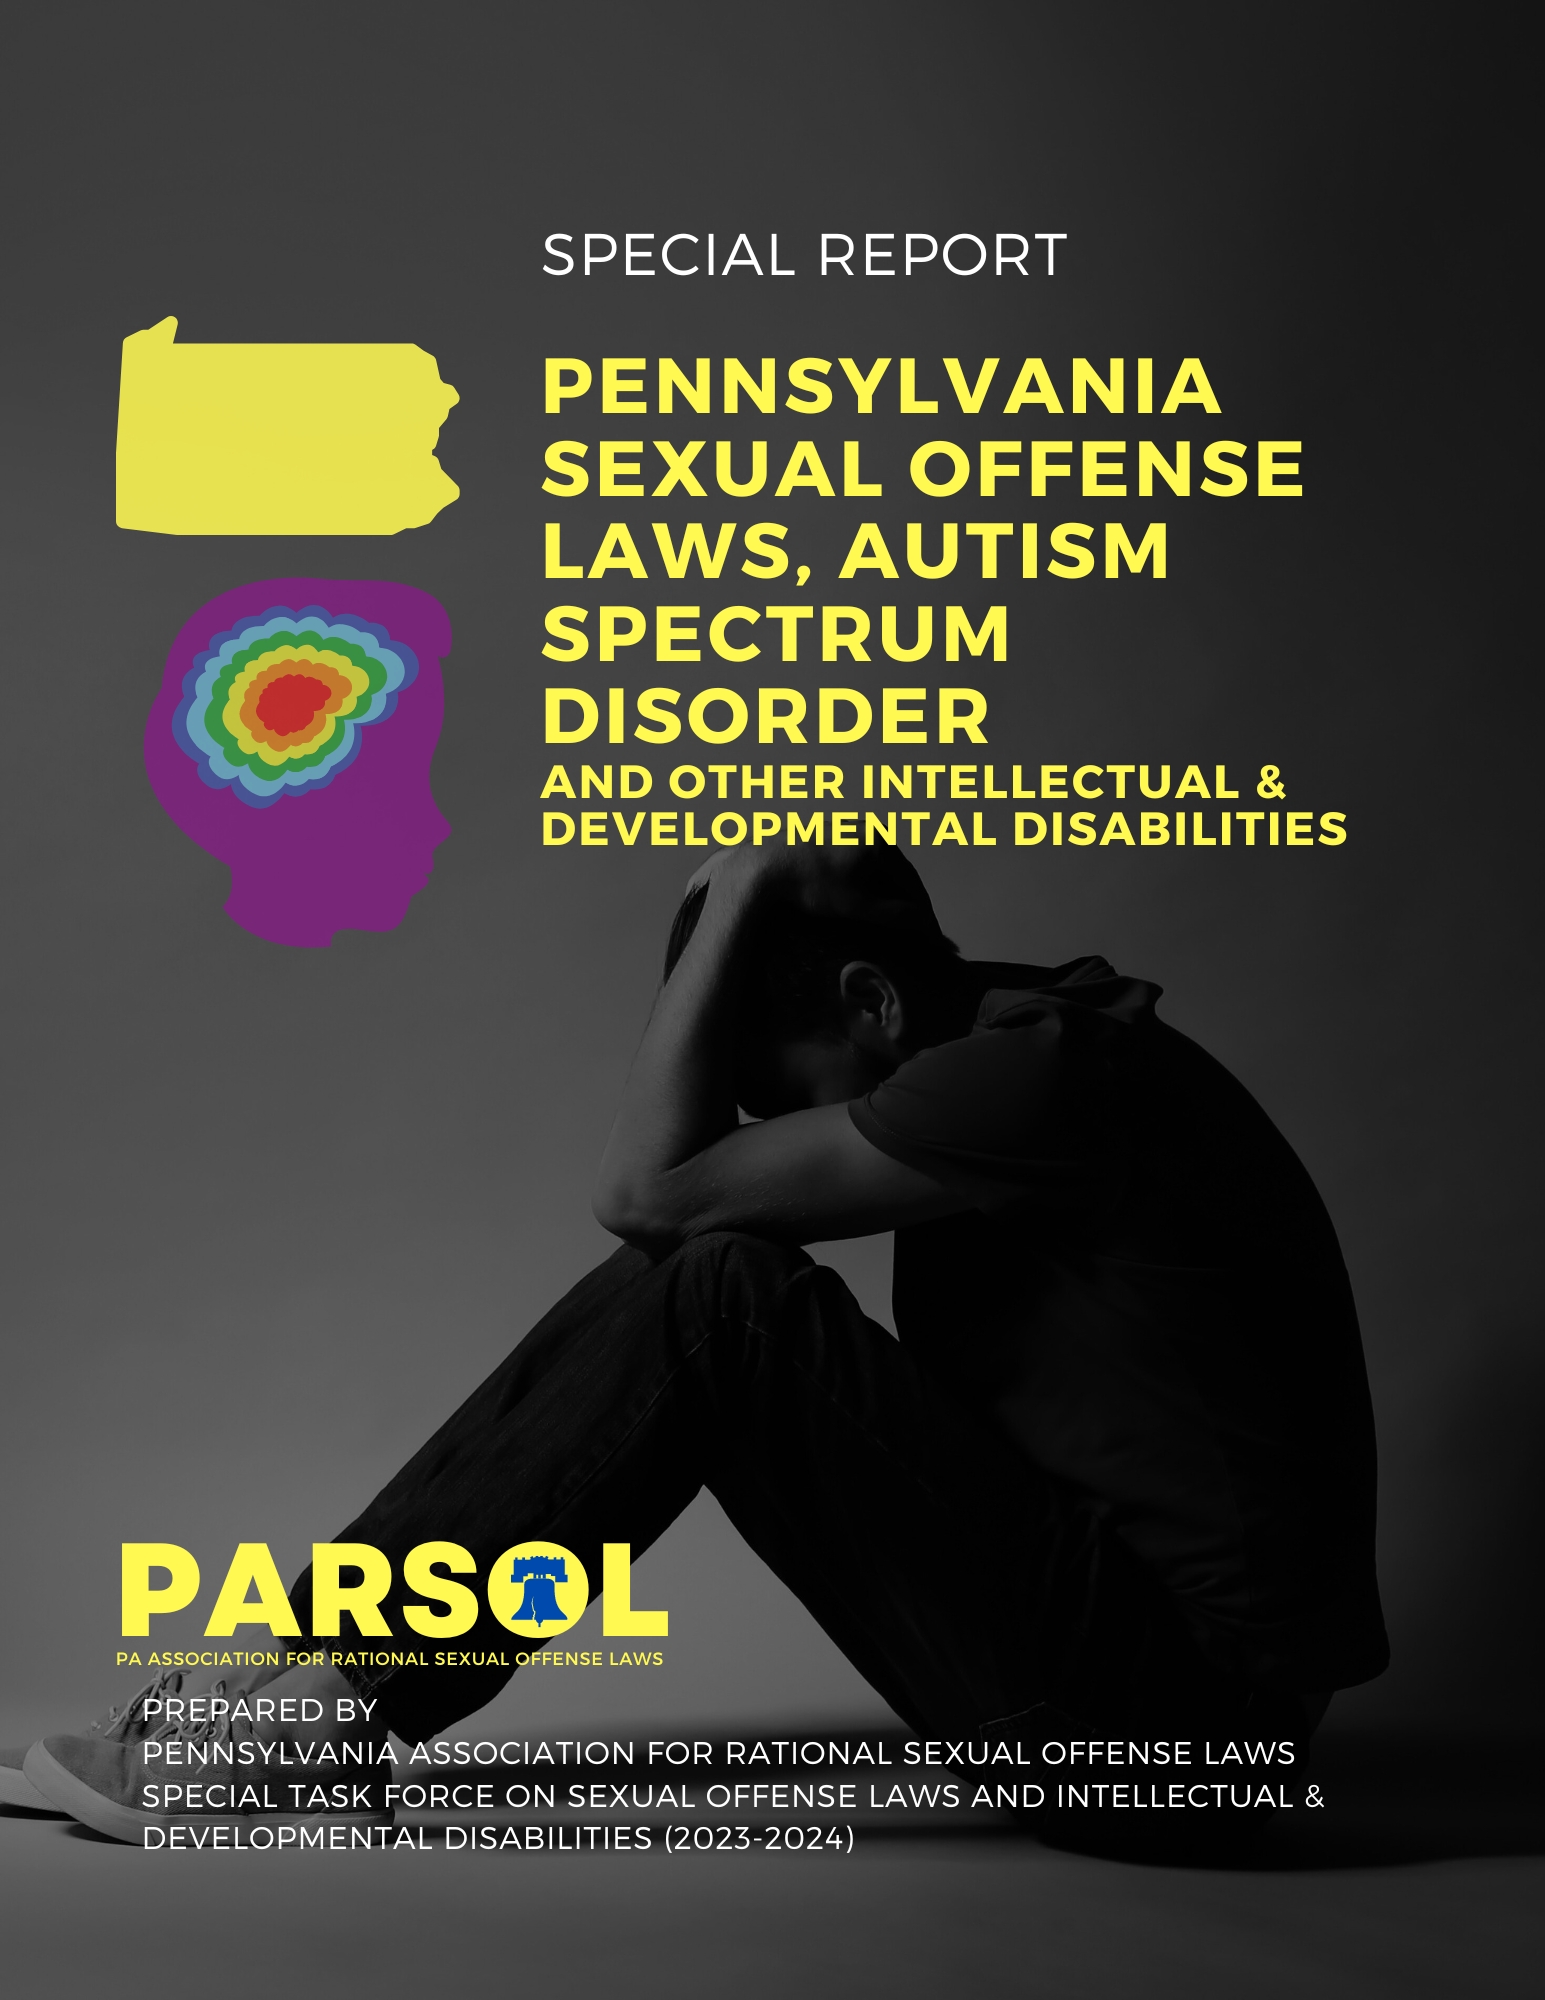 PARSOL's Sex Offense Laws & Autism/IDD Report Cover